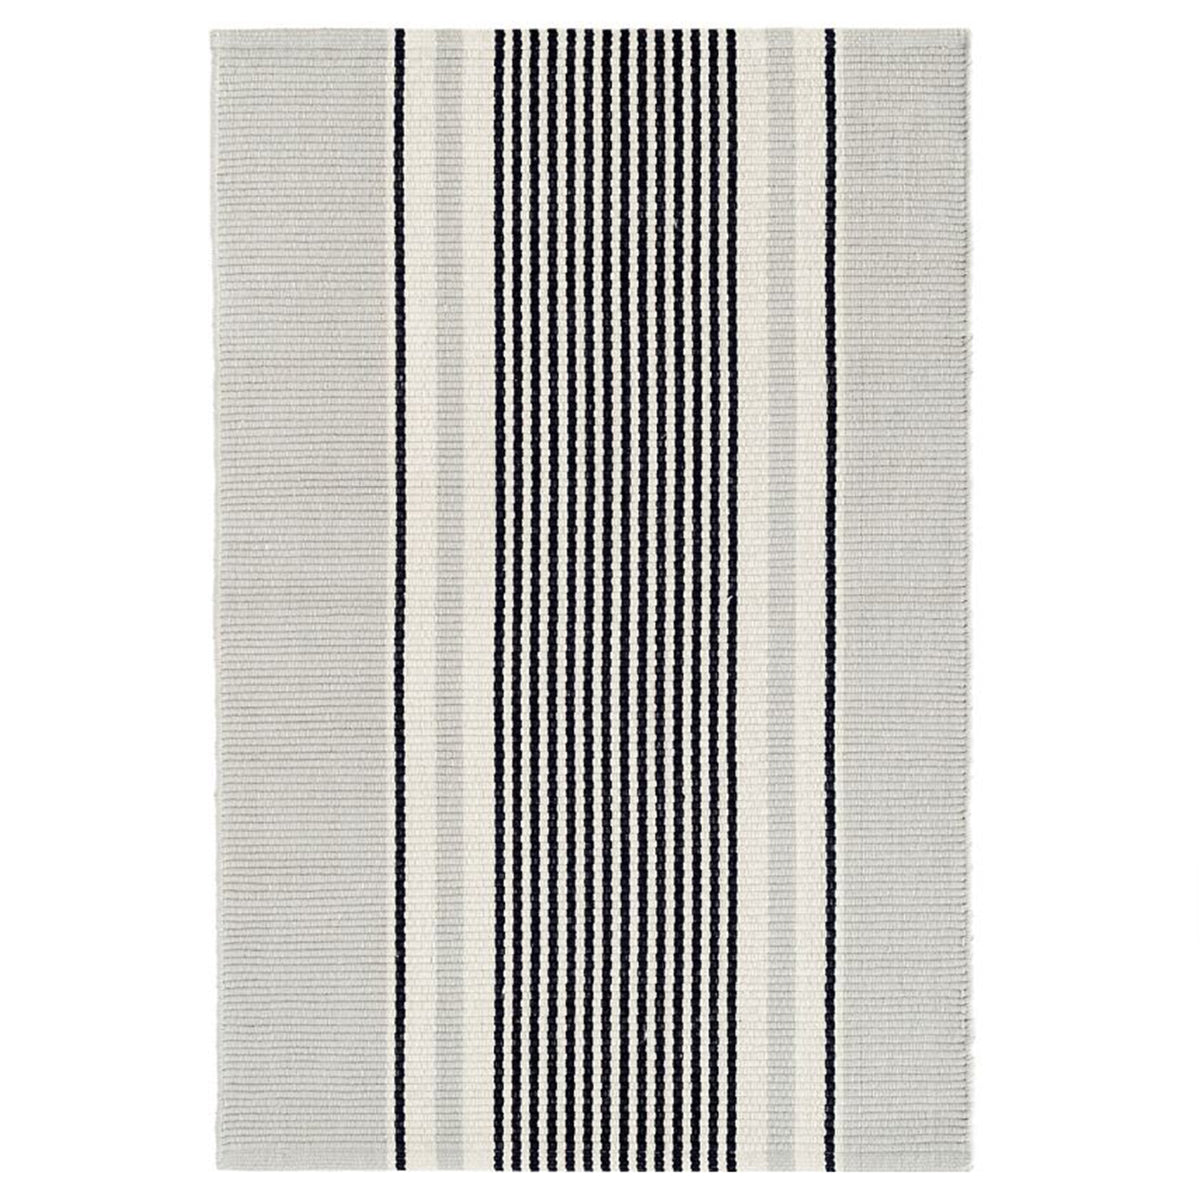 Dash & Albert Gunner Stripe 2'x3' Woven Cotton Rug